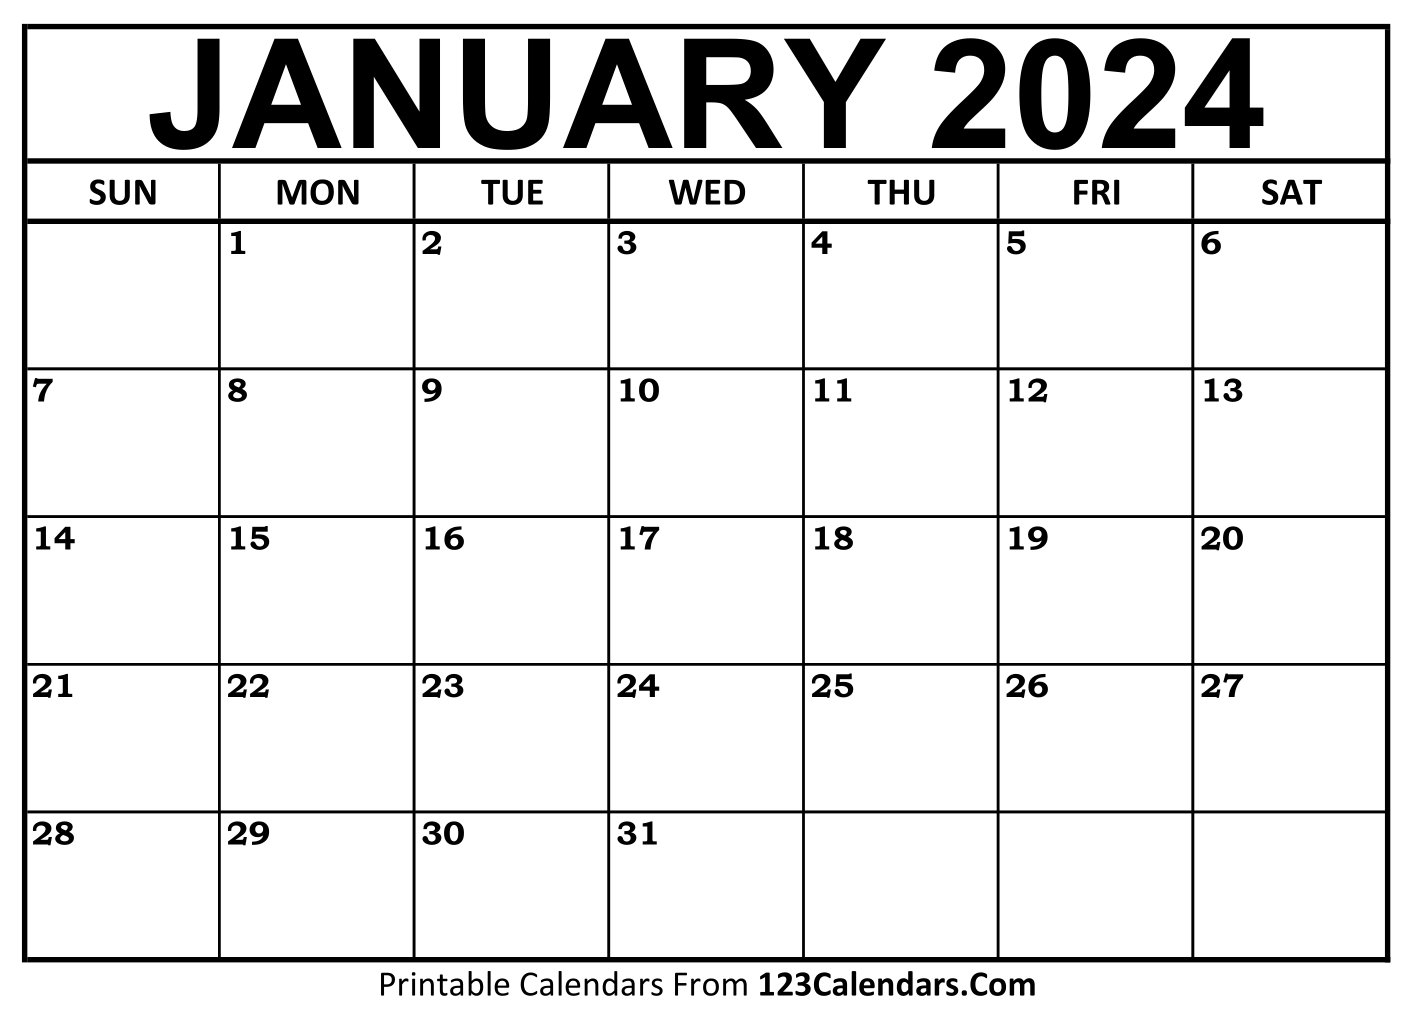 Printable January 2024 Calendar Templates - 123Calendars for January 2024 Calendar Printable